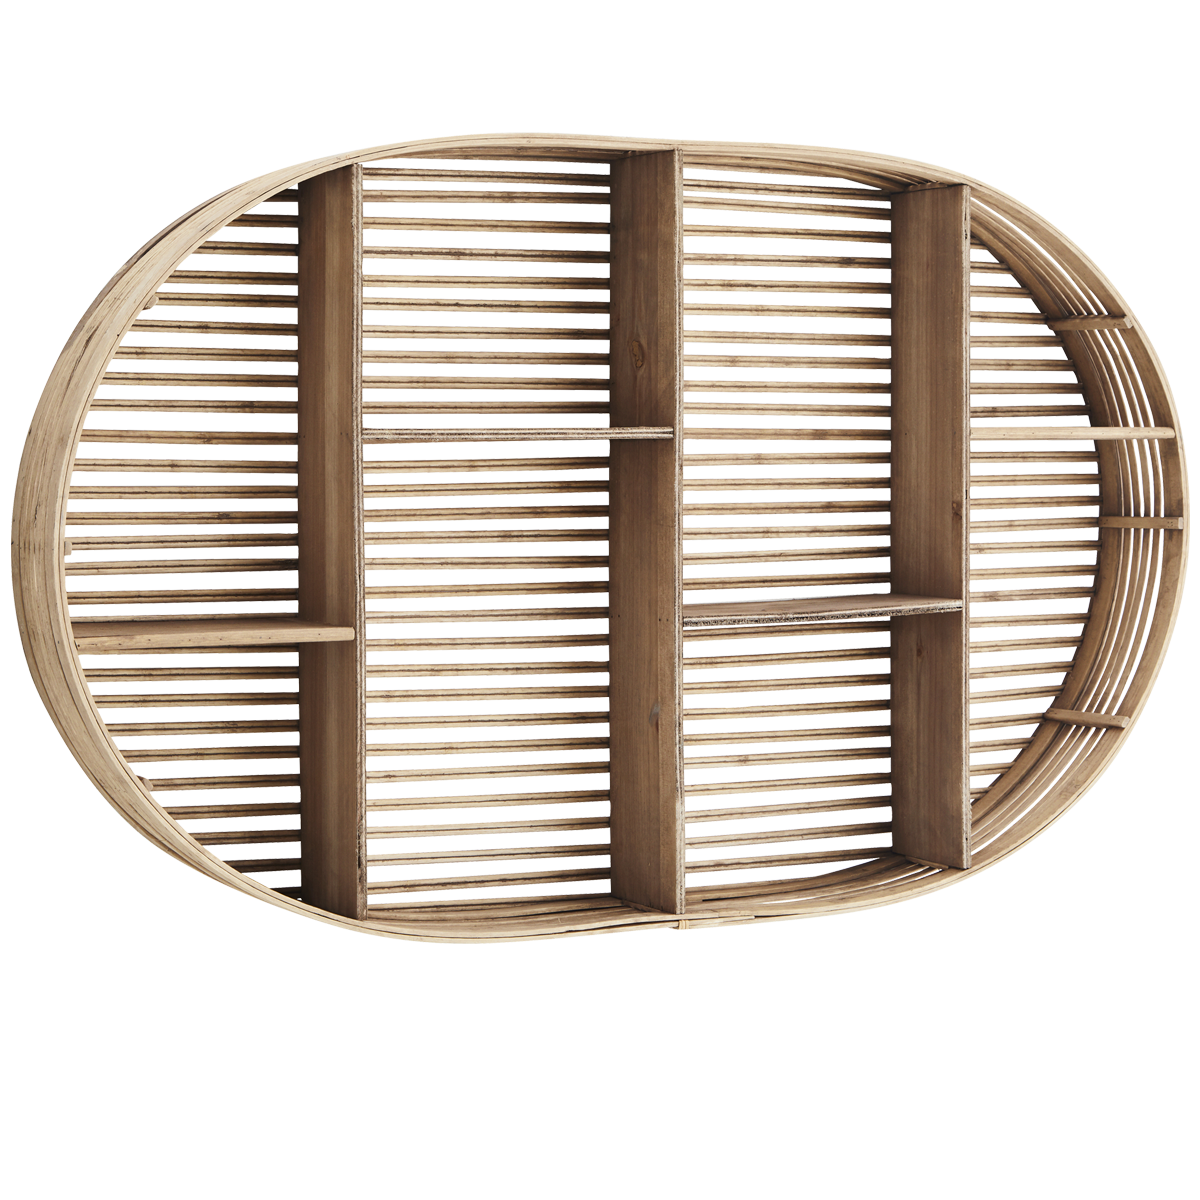 Oval bamboo shelf